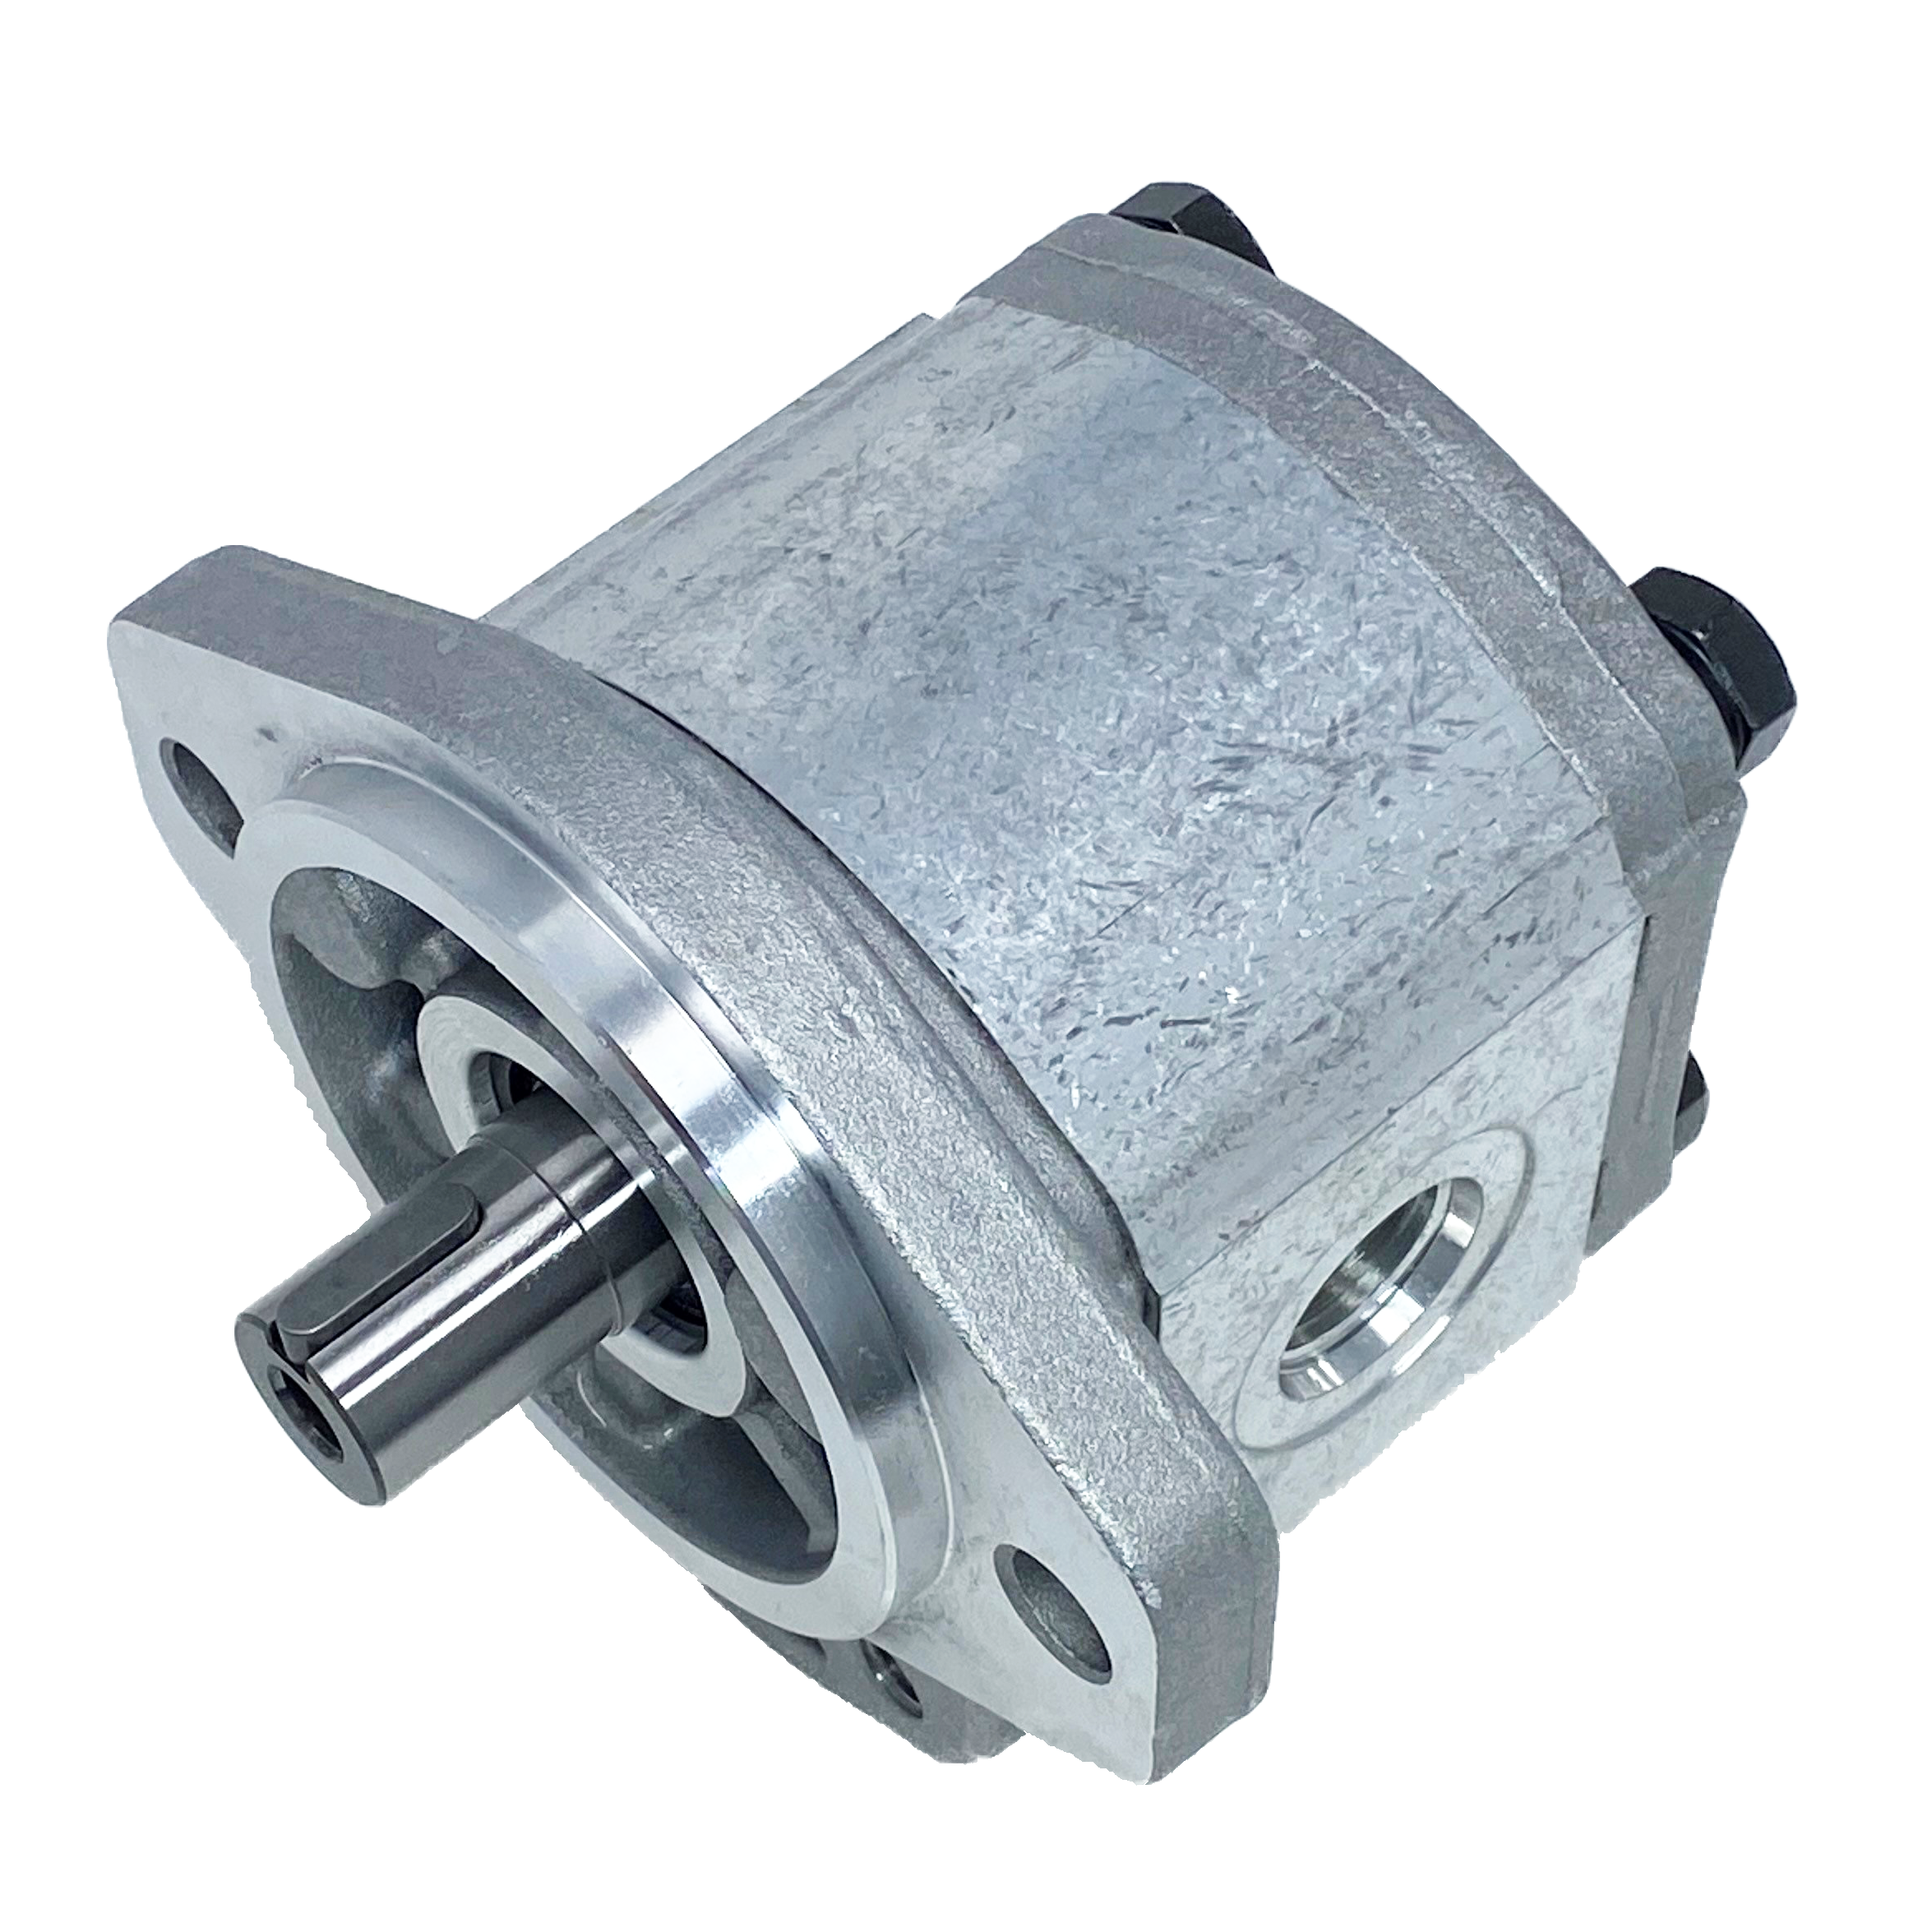 PLM20.4B0-50S1-LOC/OC-N-EL : Casappa Polaris Gear Motor, 4.95cc, 3625psi Rated, 4000RPM, Reversible Interior Drain, 3/4" Bore x 3/16" Key Shaft, SAE A 2-Bolt Flange, 0.625 (5/8") #10 SAE Inlet, 0.625 (5/8") #10 SAE Outlet, Aluminum Body & Flange